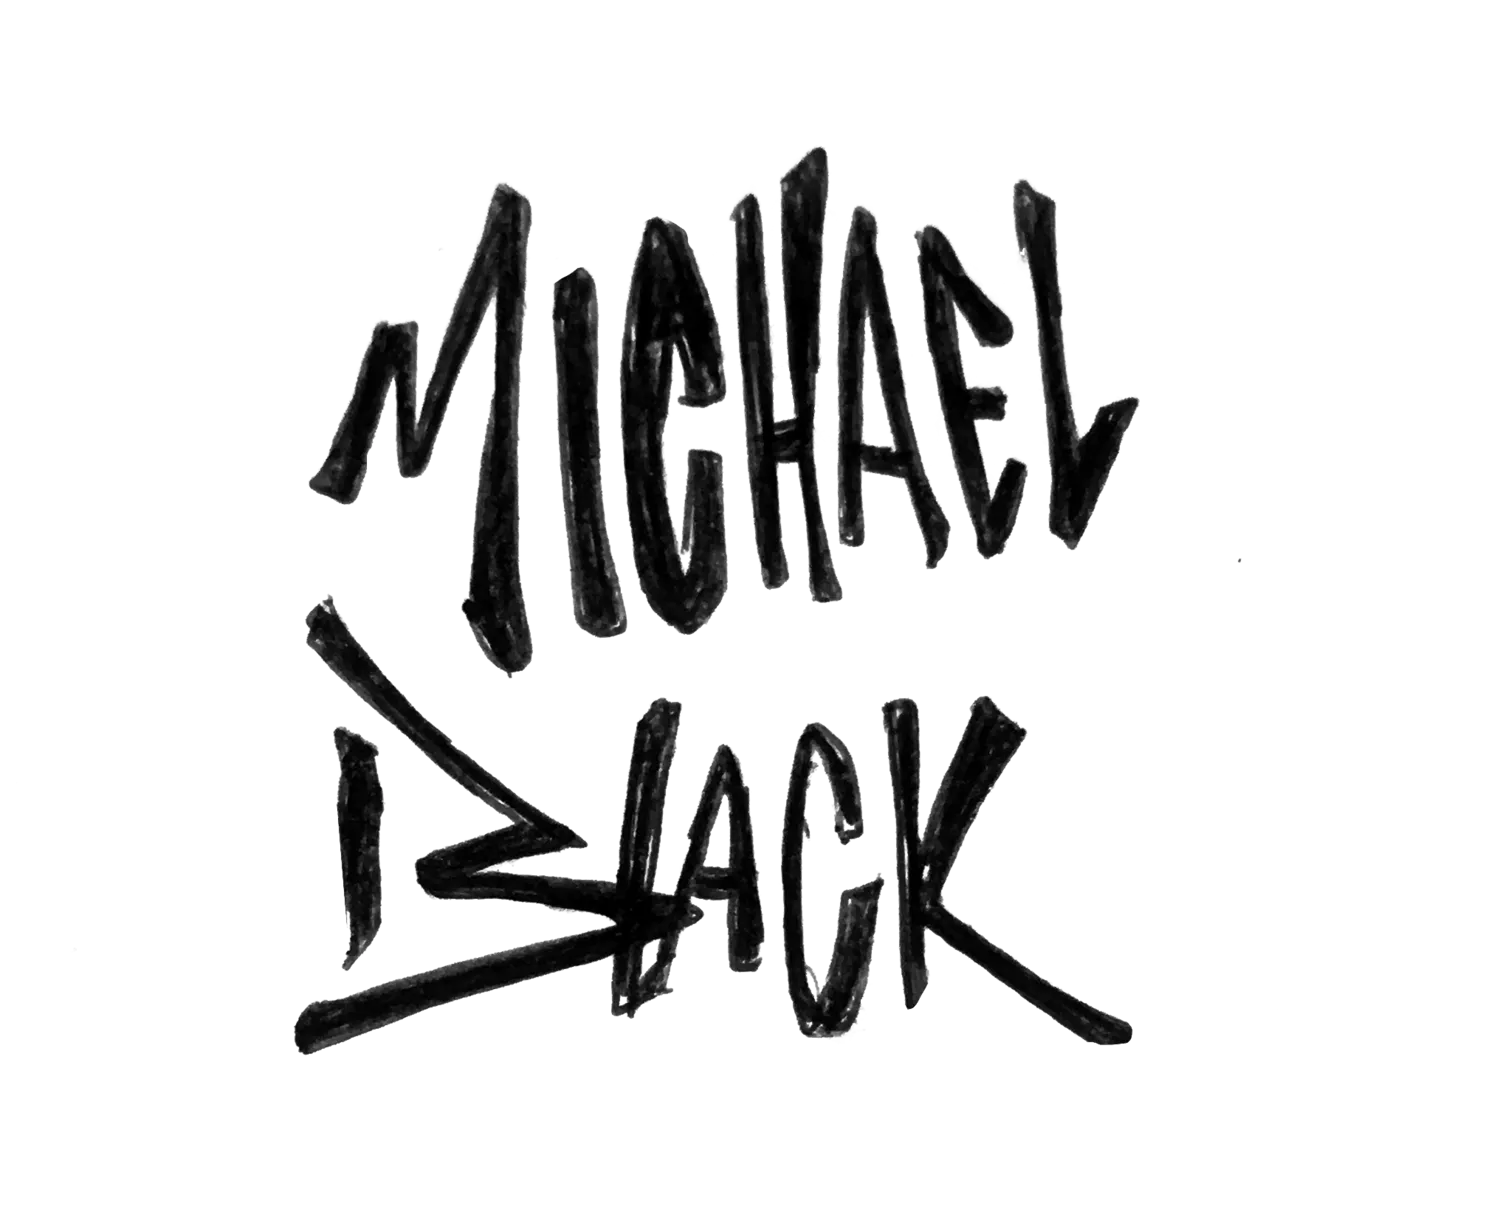 Michael Black Art